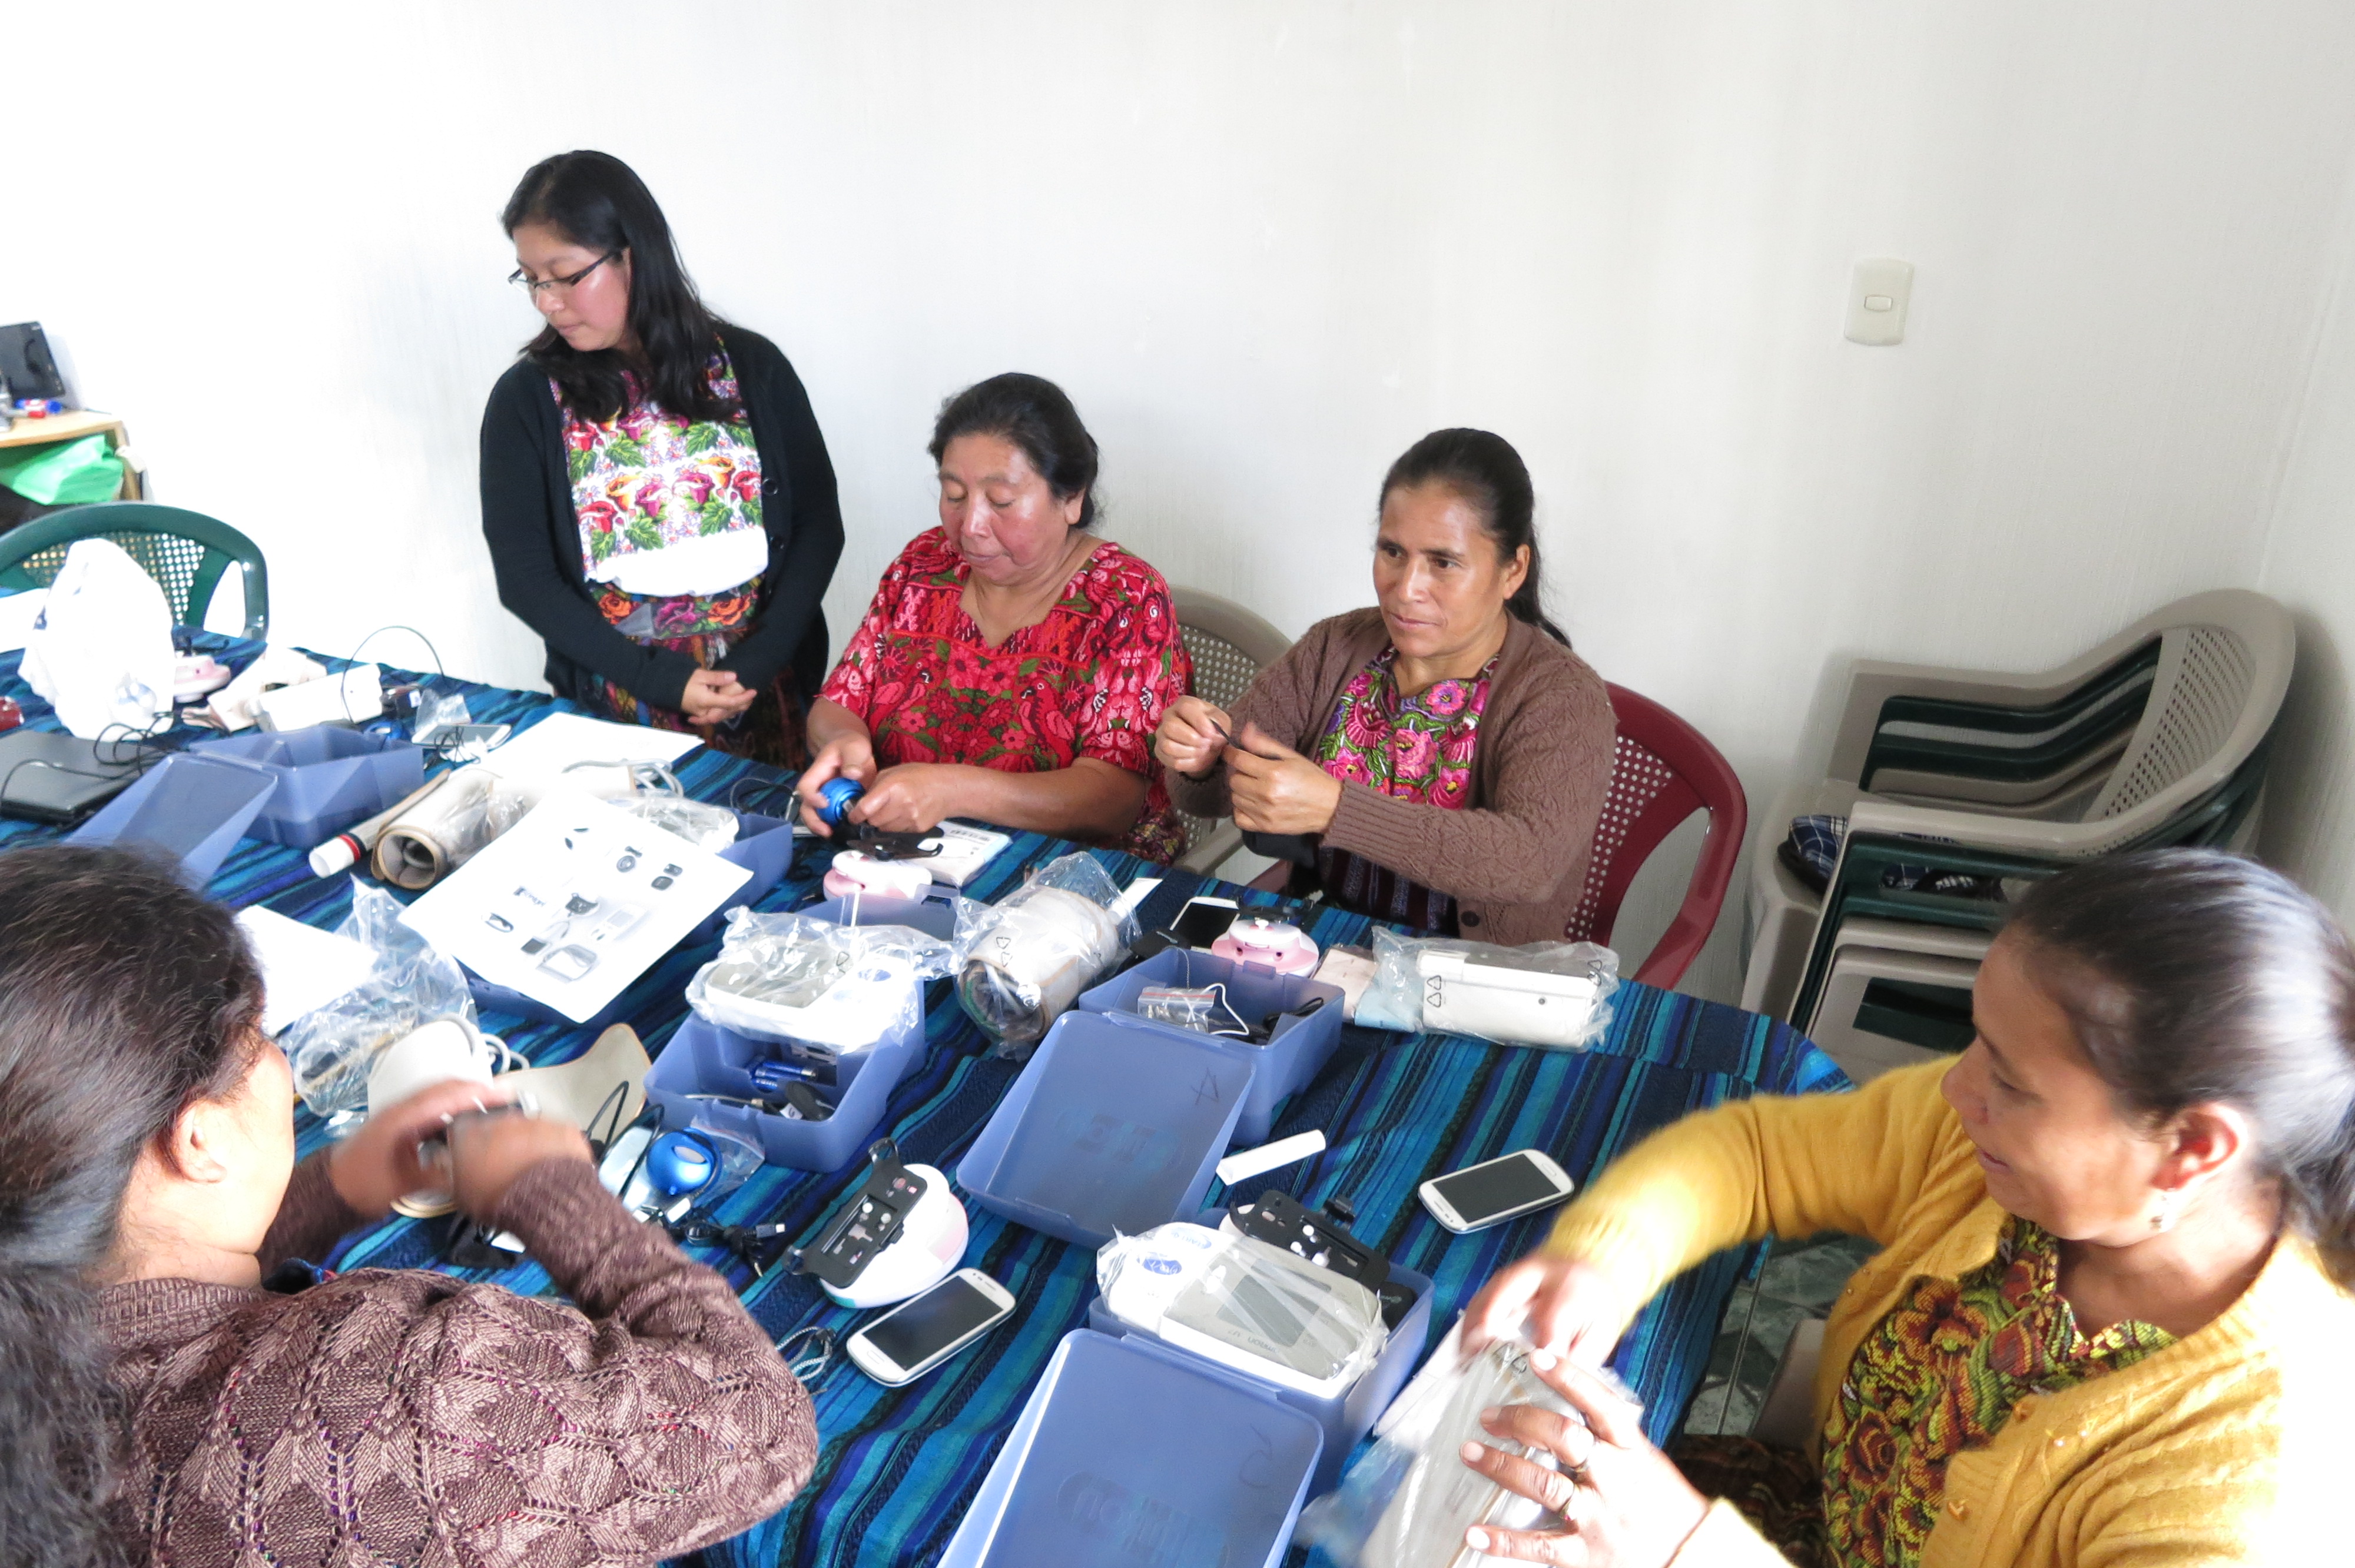 App Saves Lives of Maya Women In Guatemala